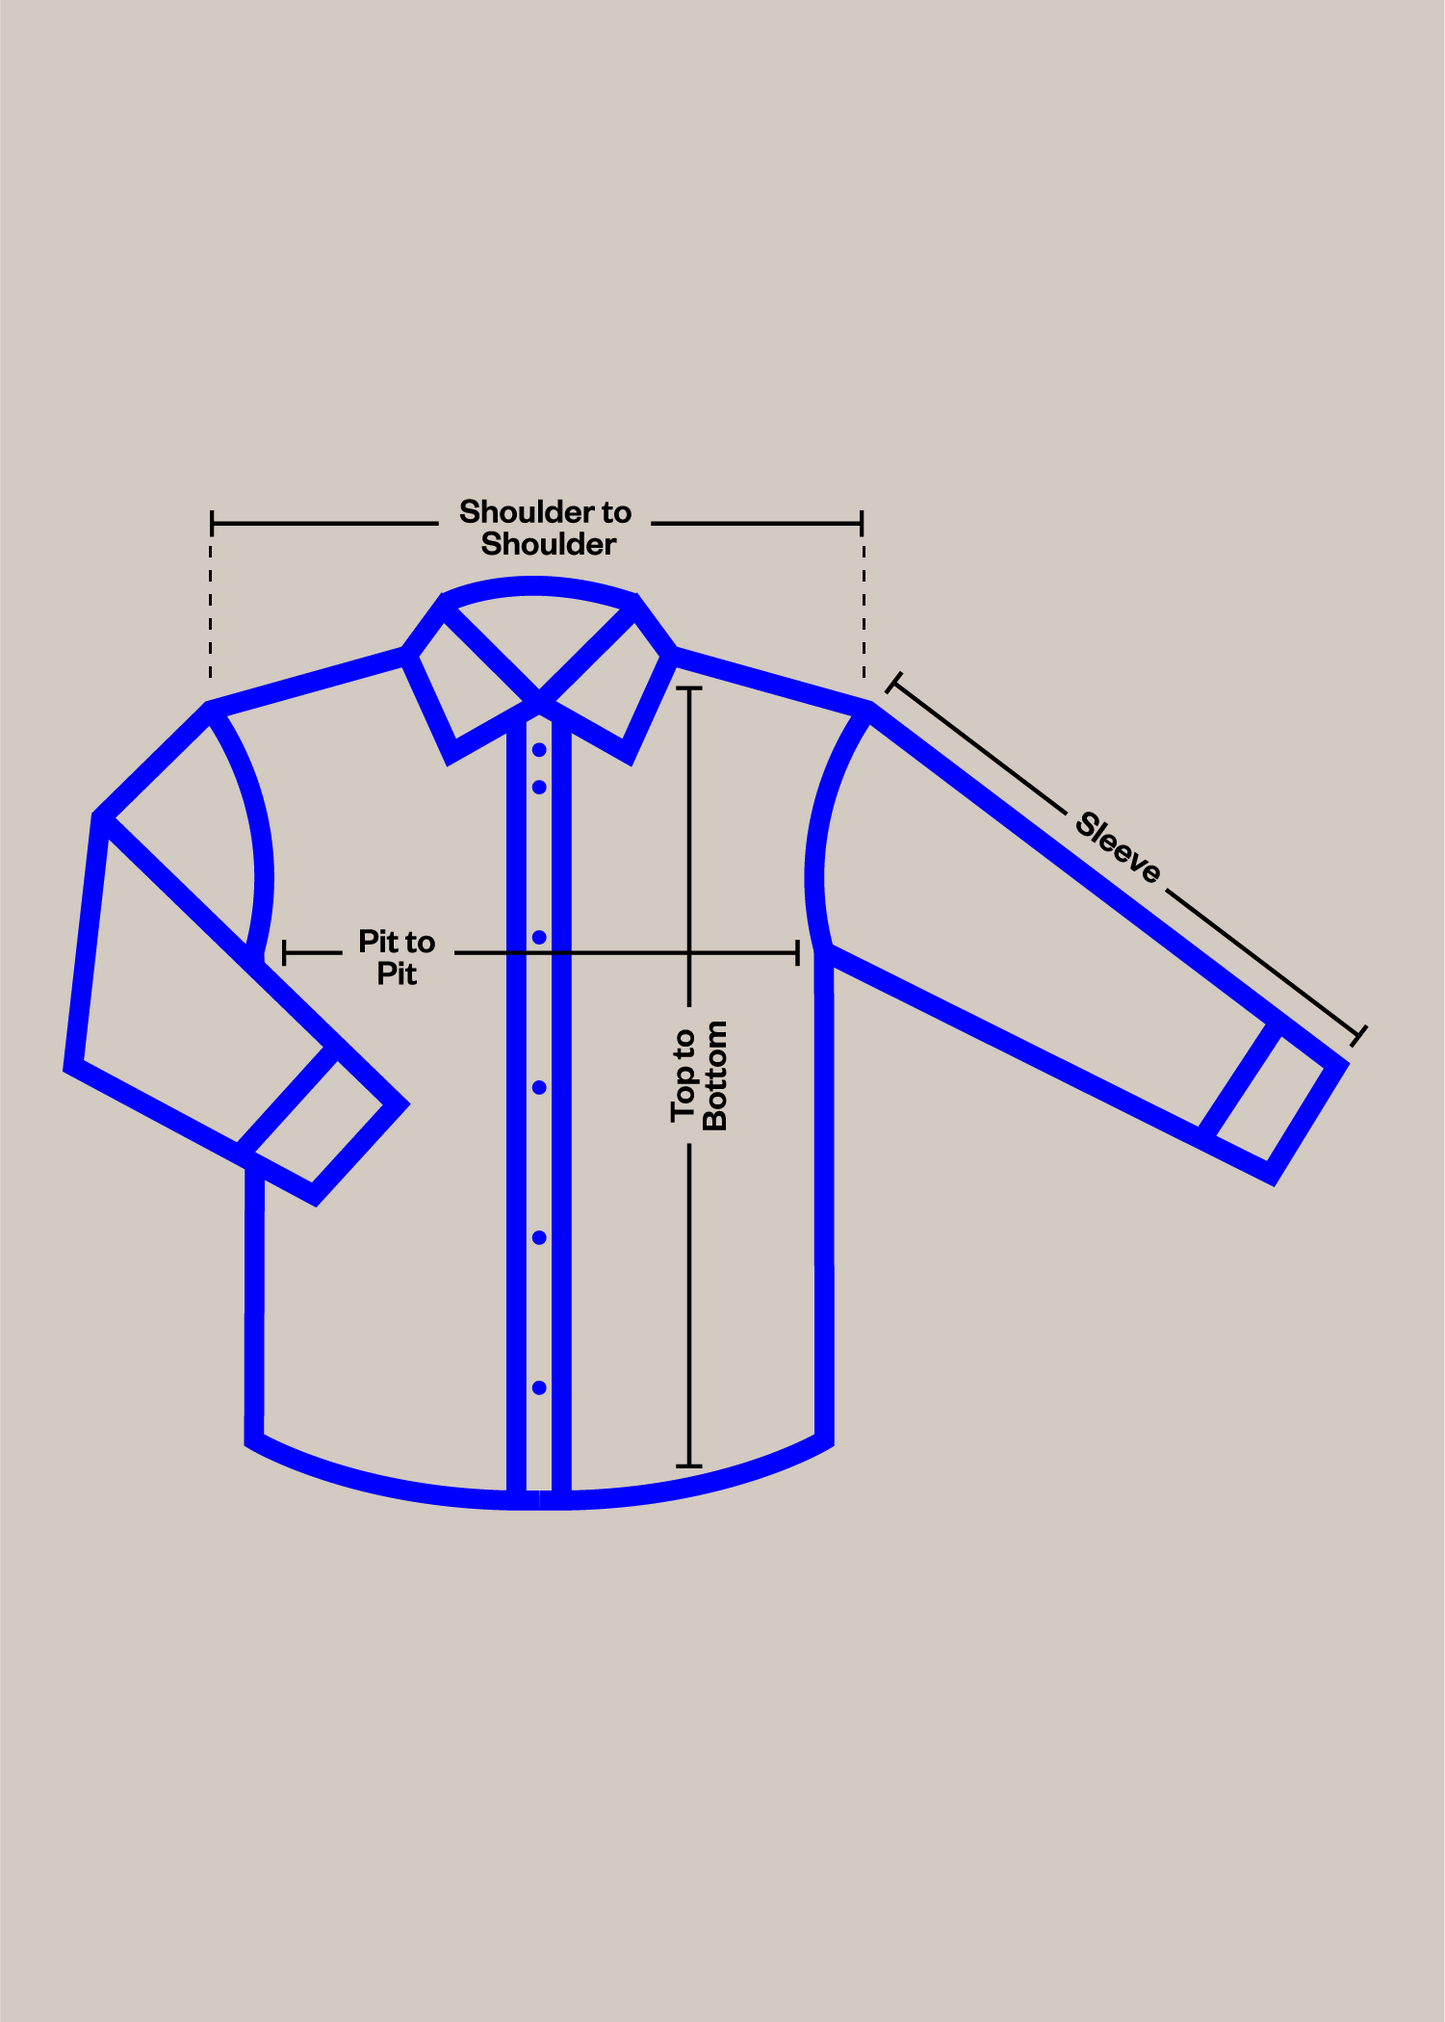 1980s Wool Handmade Flannel Button Up Shirt Size M/L